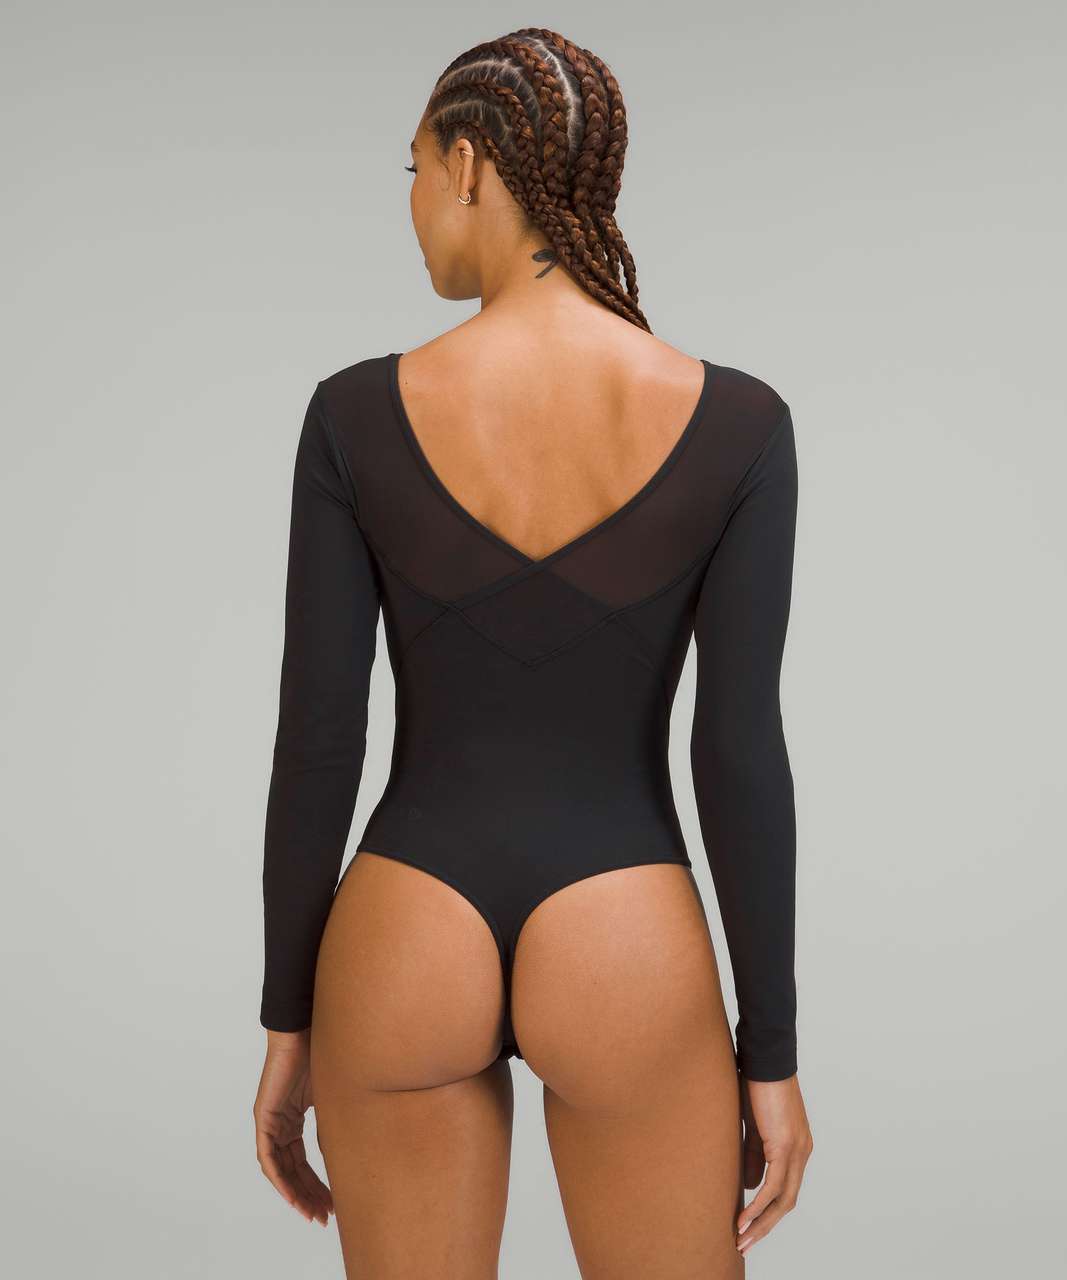 Lululemon Align Bodysuit Black Size 4 - $47 (46% Off Retail